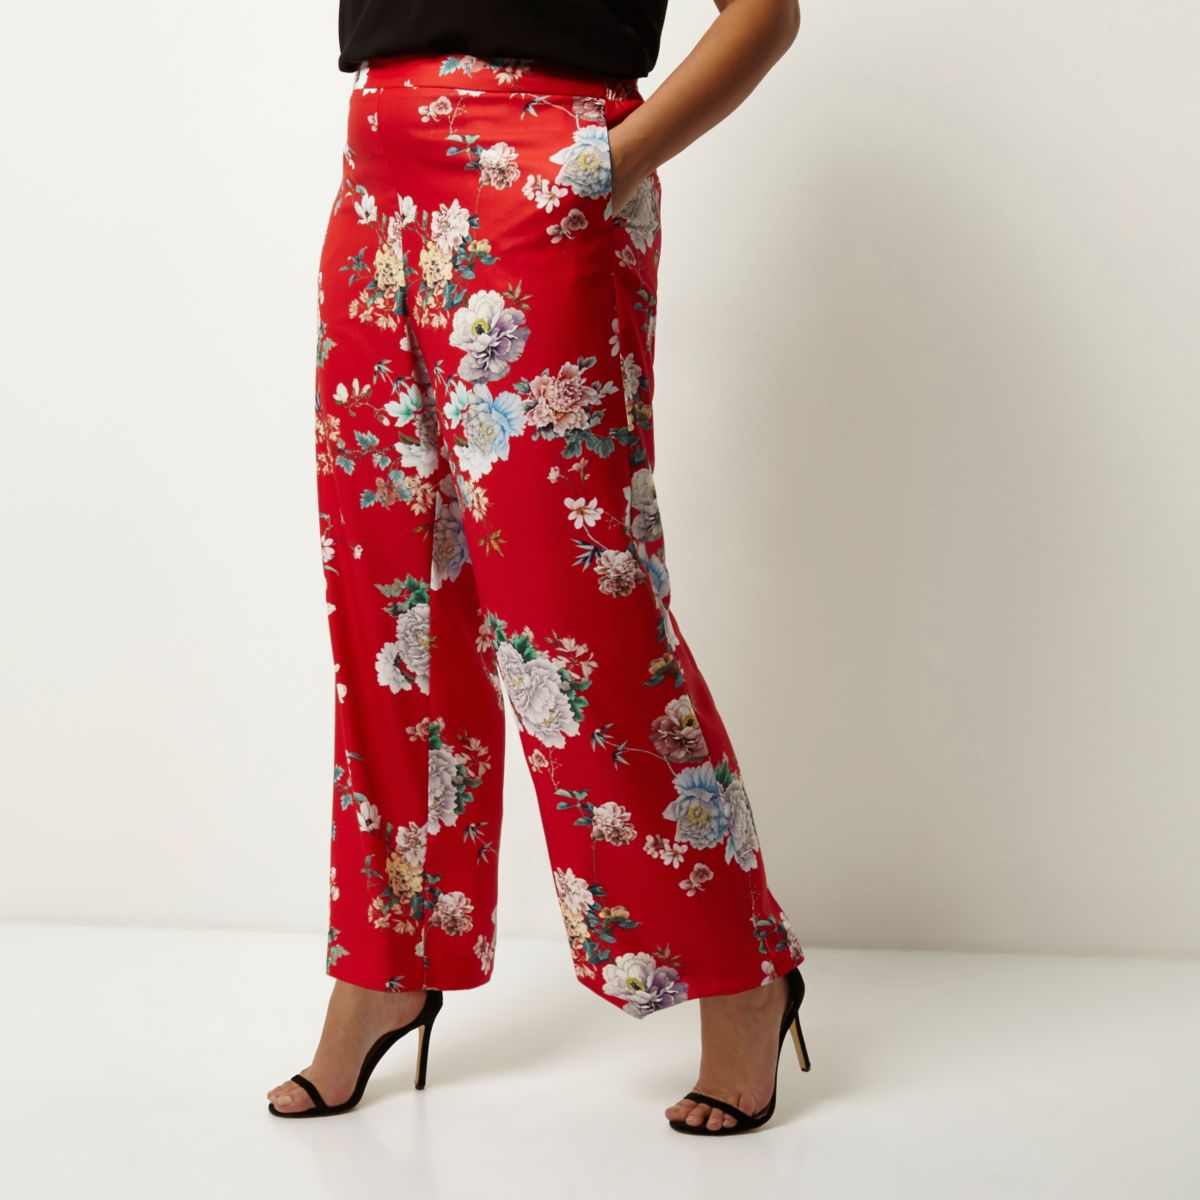 Plus red floral print wide leg pants - Pants - Sale - women